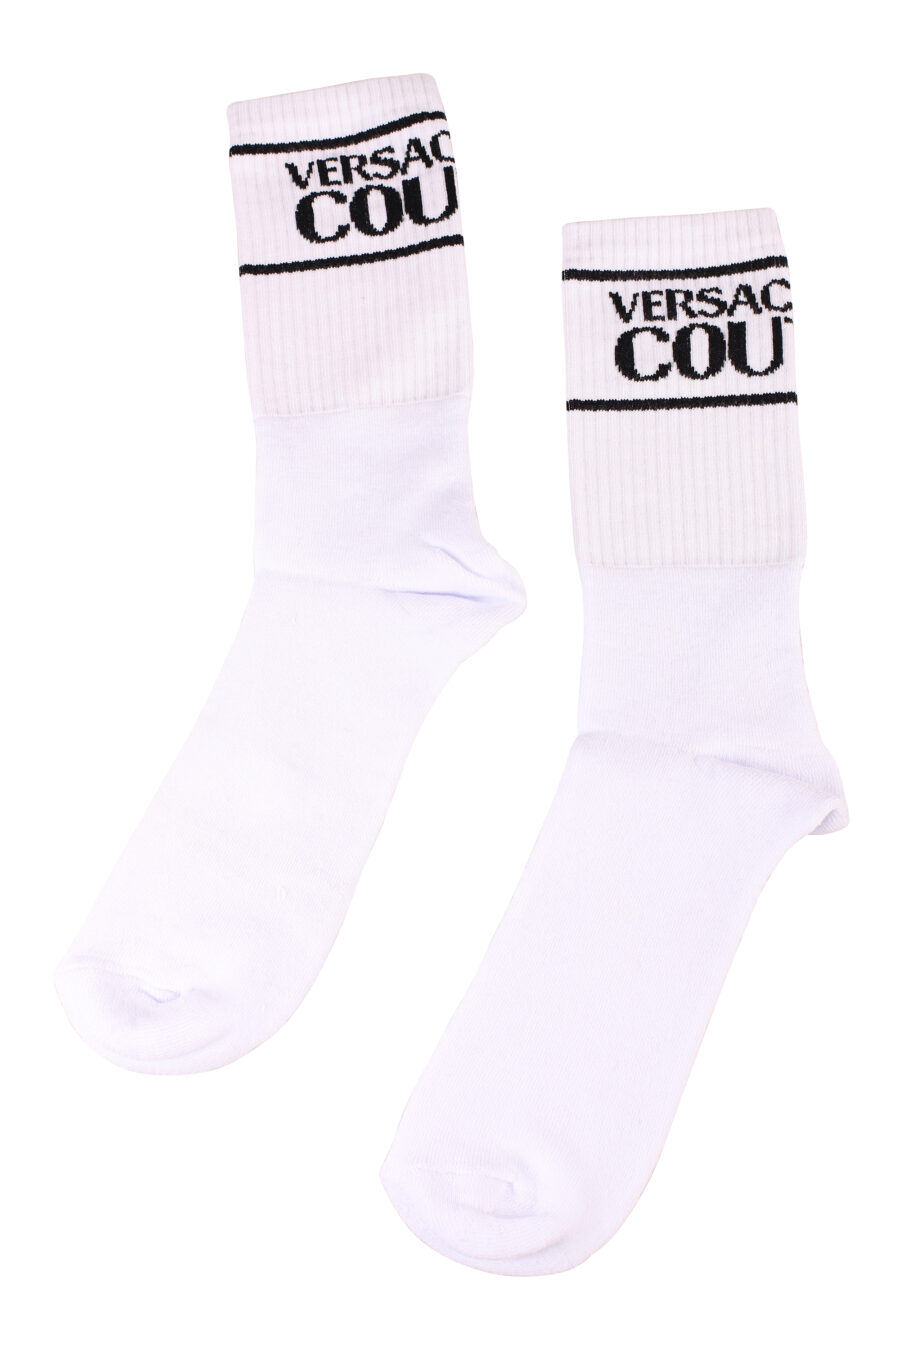 Calcetines blancos con logo horizontal negro - IMG 8536